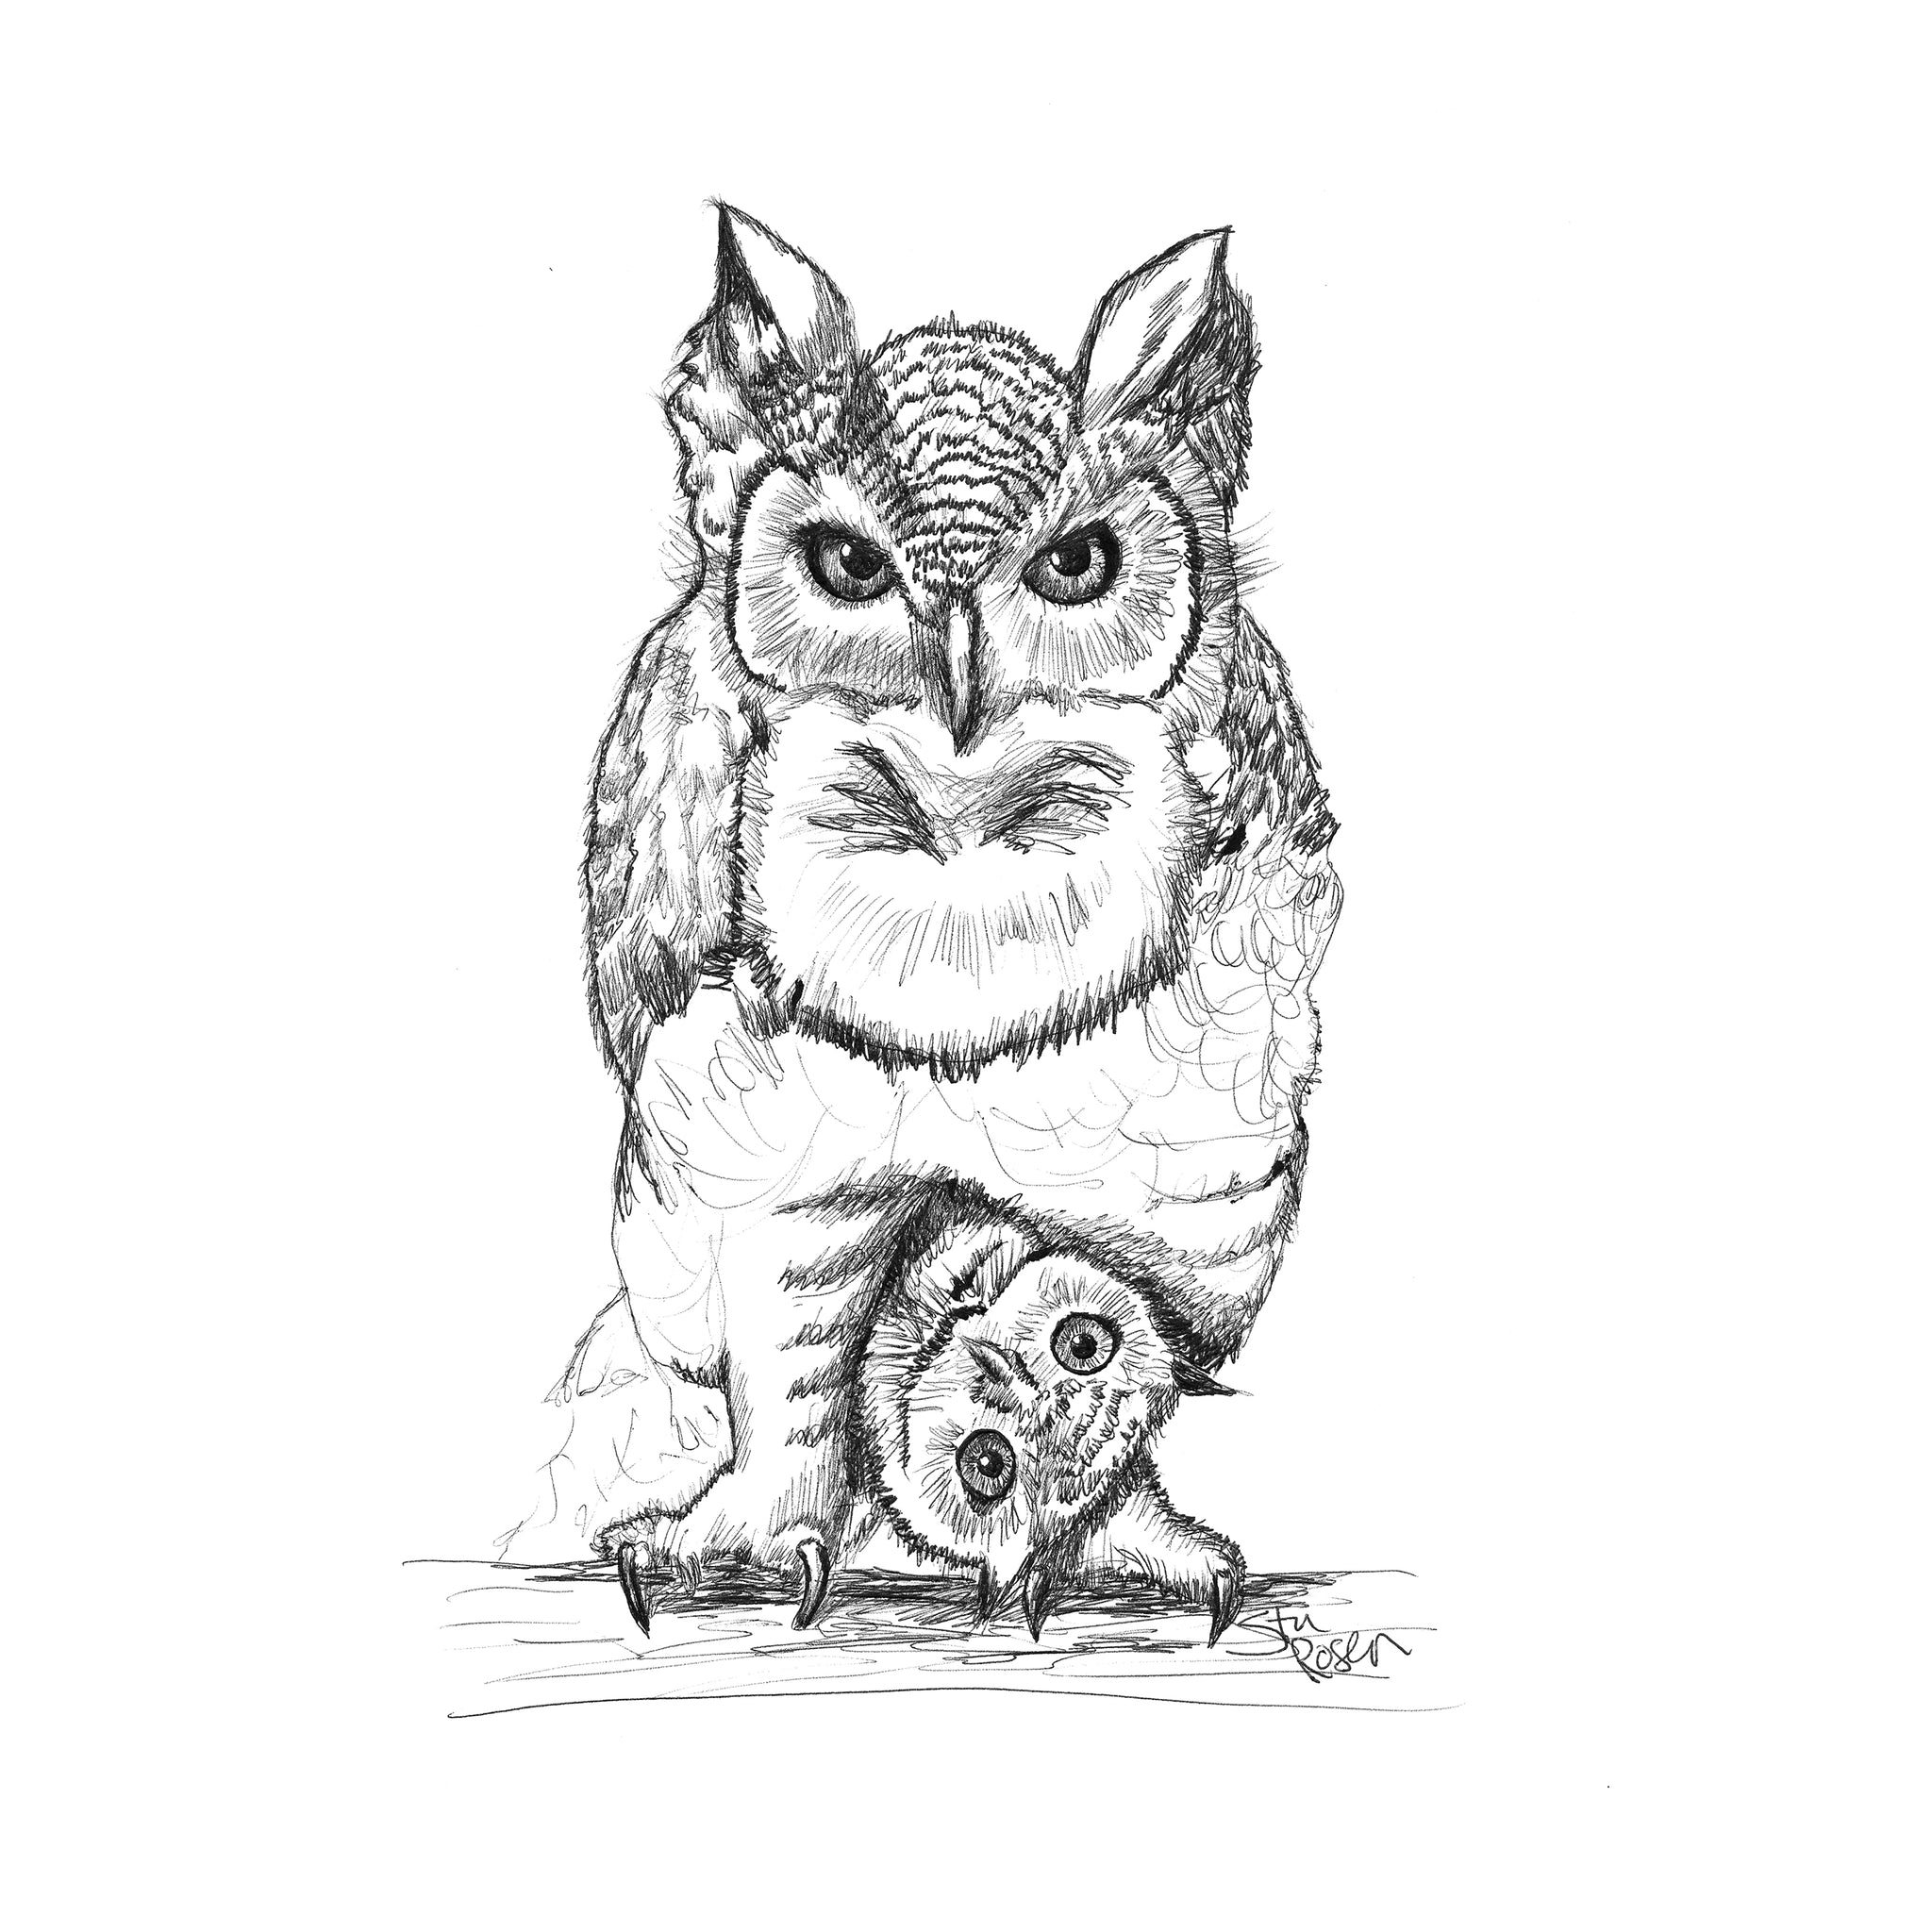 Owl - "Who Dat?" NFT Crypto